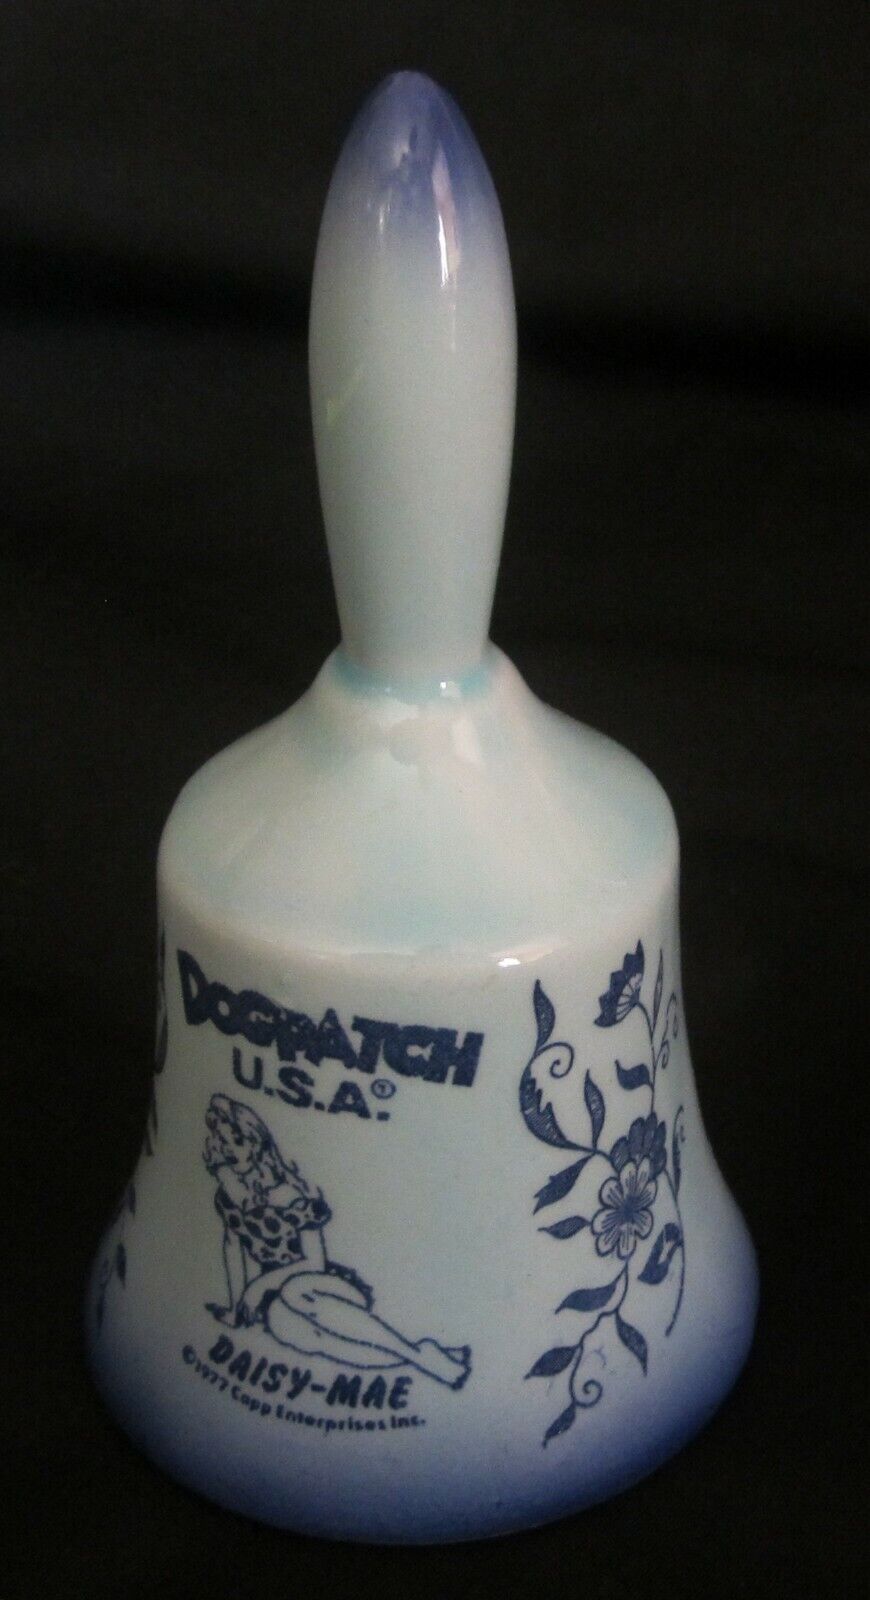 Daisy Mae Dogpatch USA Lil Abner Ceramic Bell Vintage Souvenir